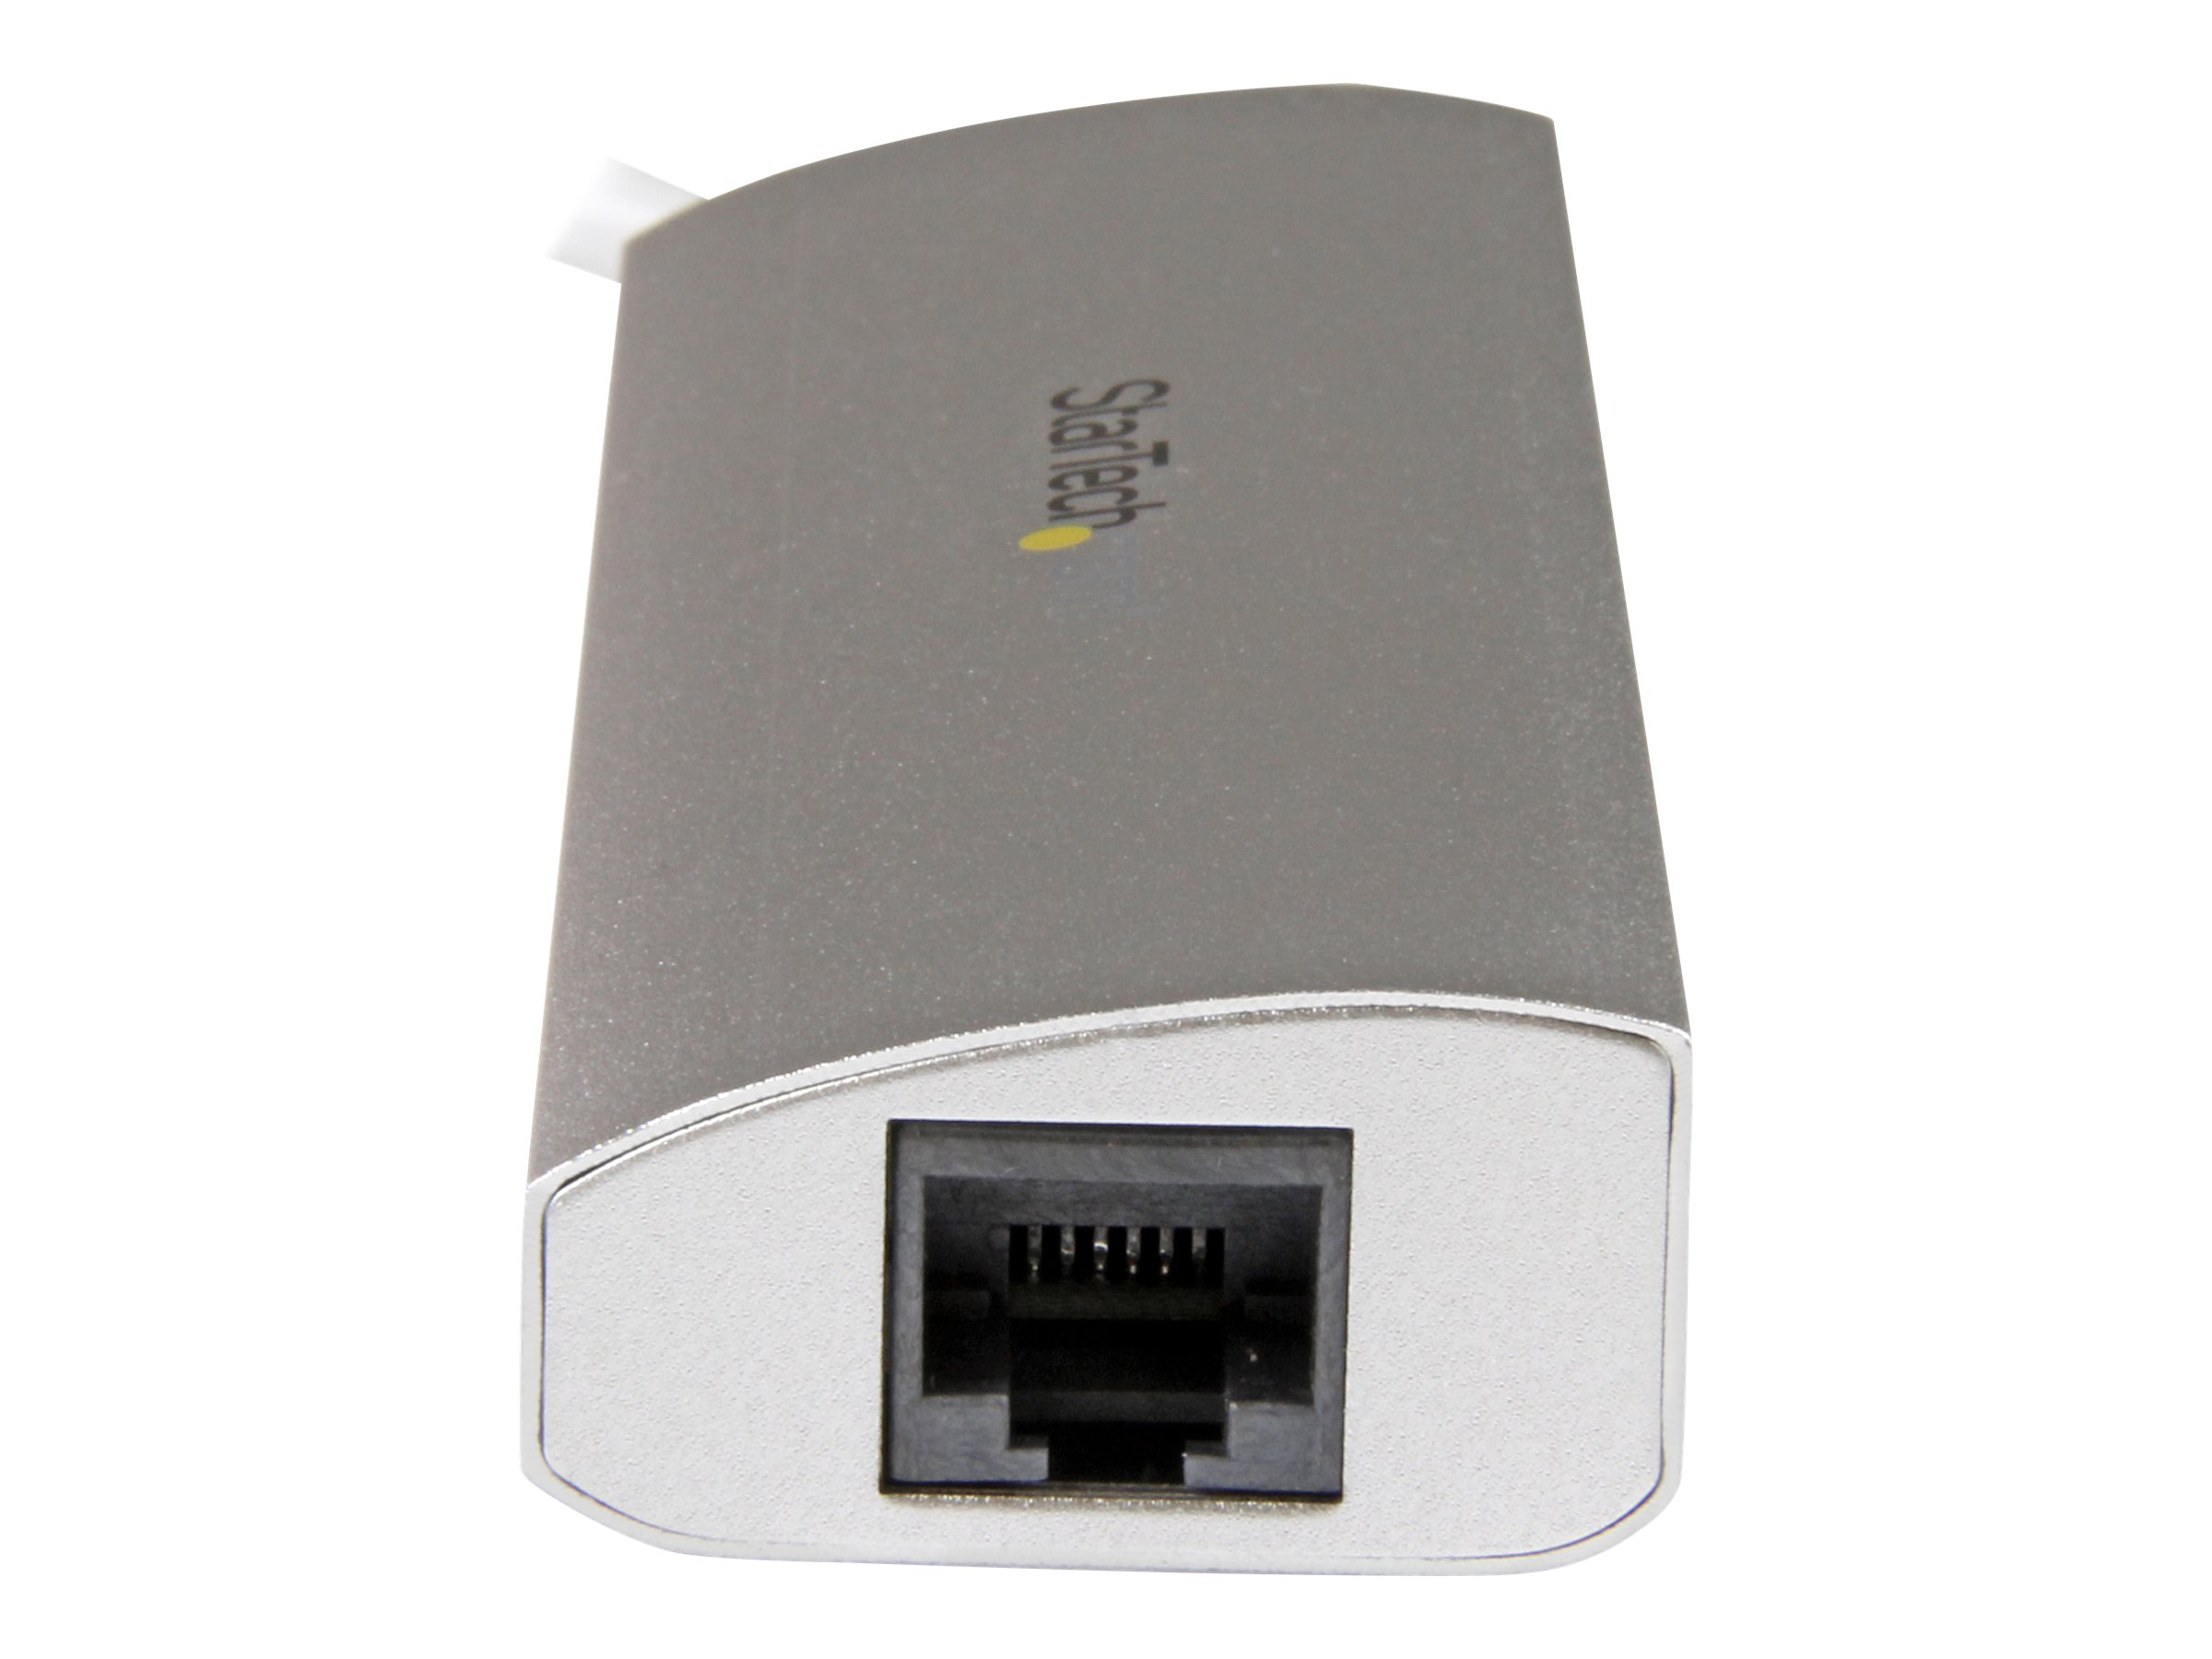 StarTech.com 3 Port mobiler USB 3.0 Hub plus Gigabit Ethernet